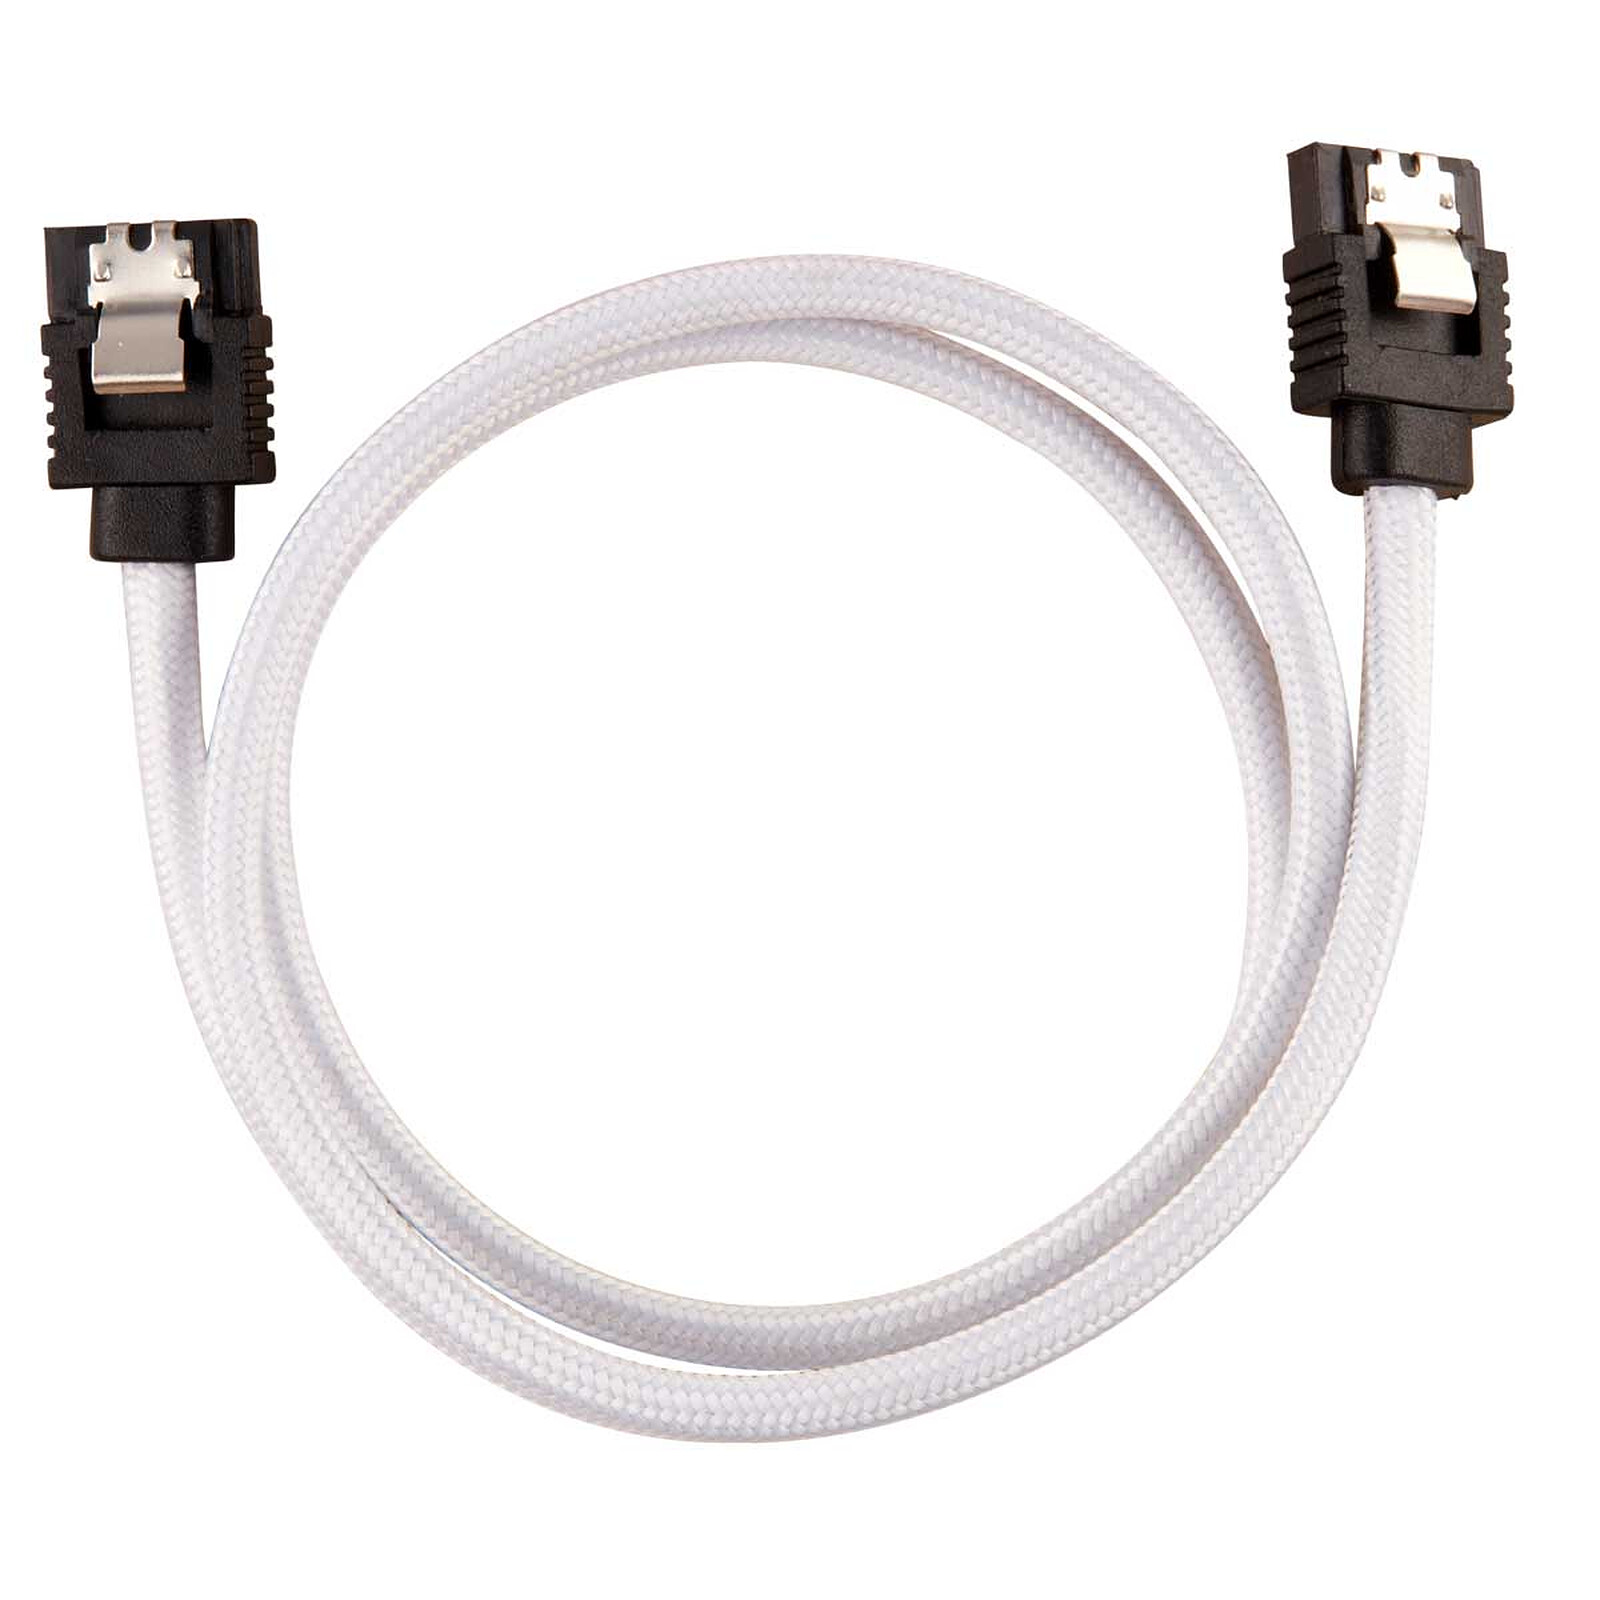 Câble SATA 2-en-1 avec alimentation Molex (pour 1 HDD ou SSD) - Serial ATA  - Garantie 3 ans LDLC